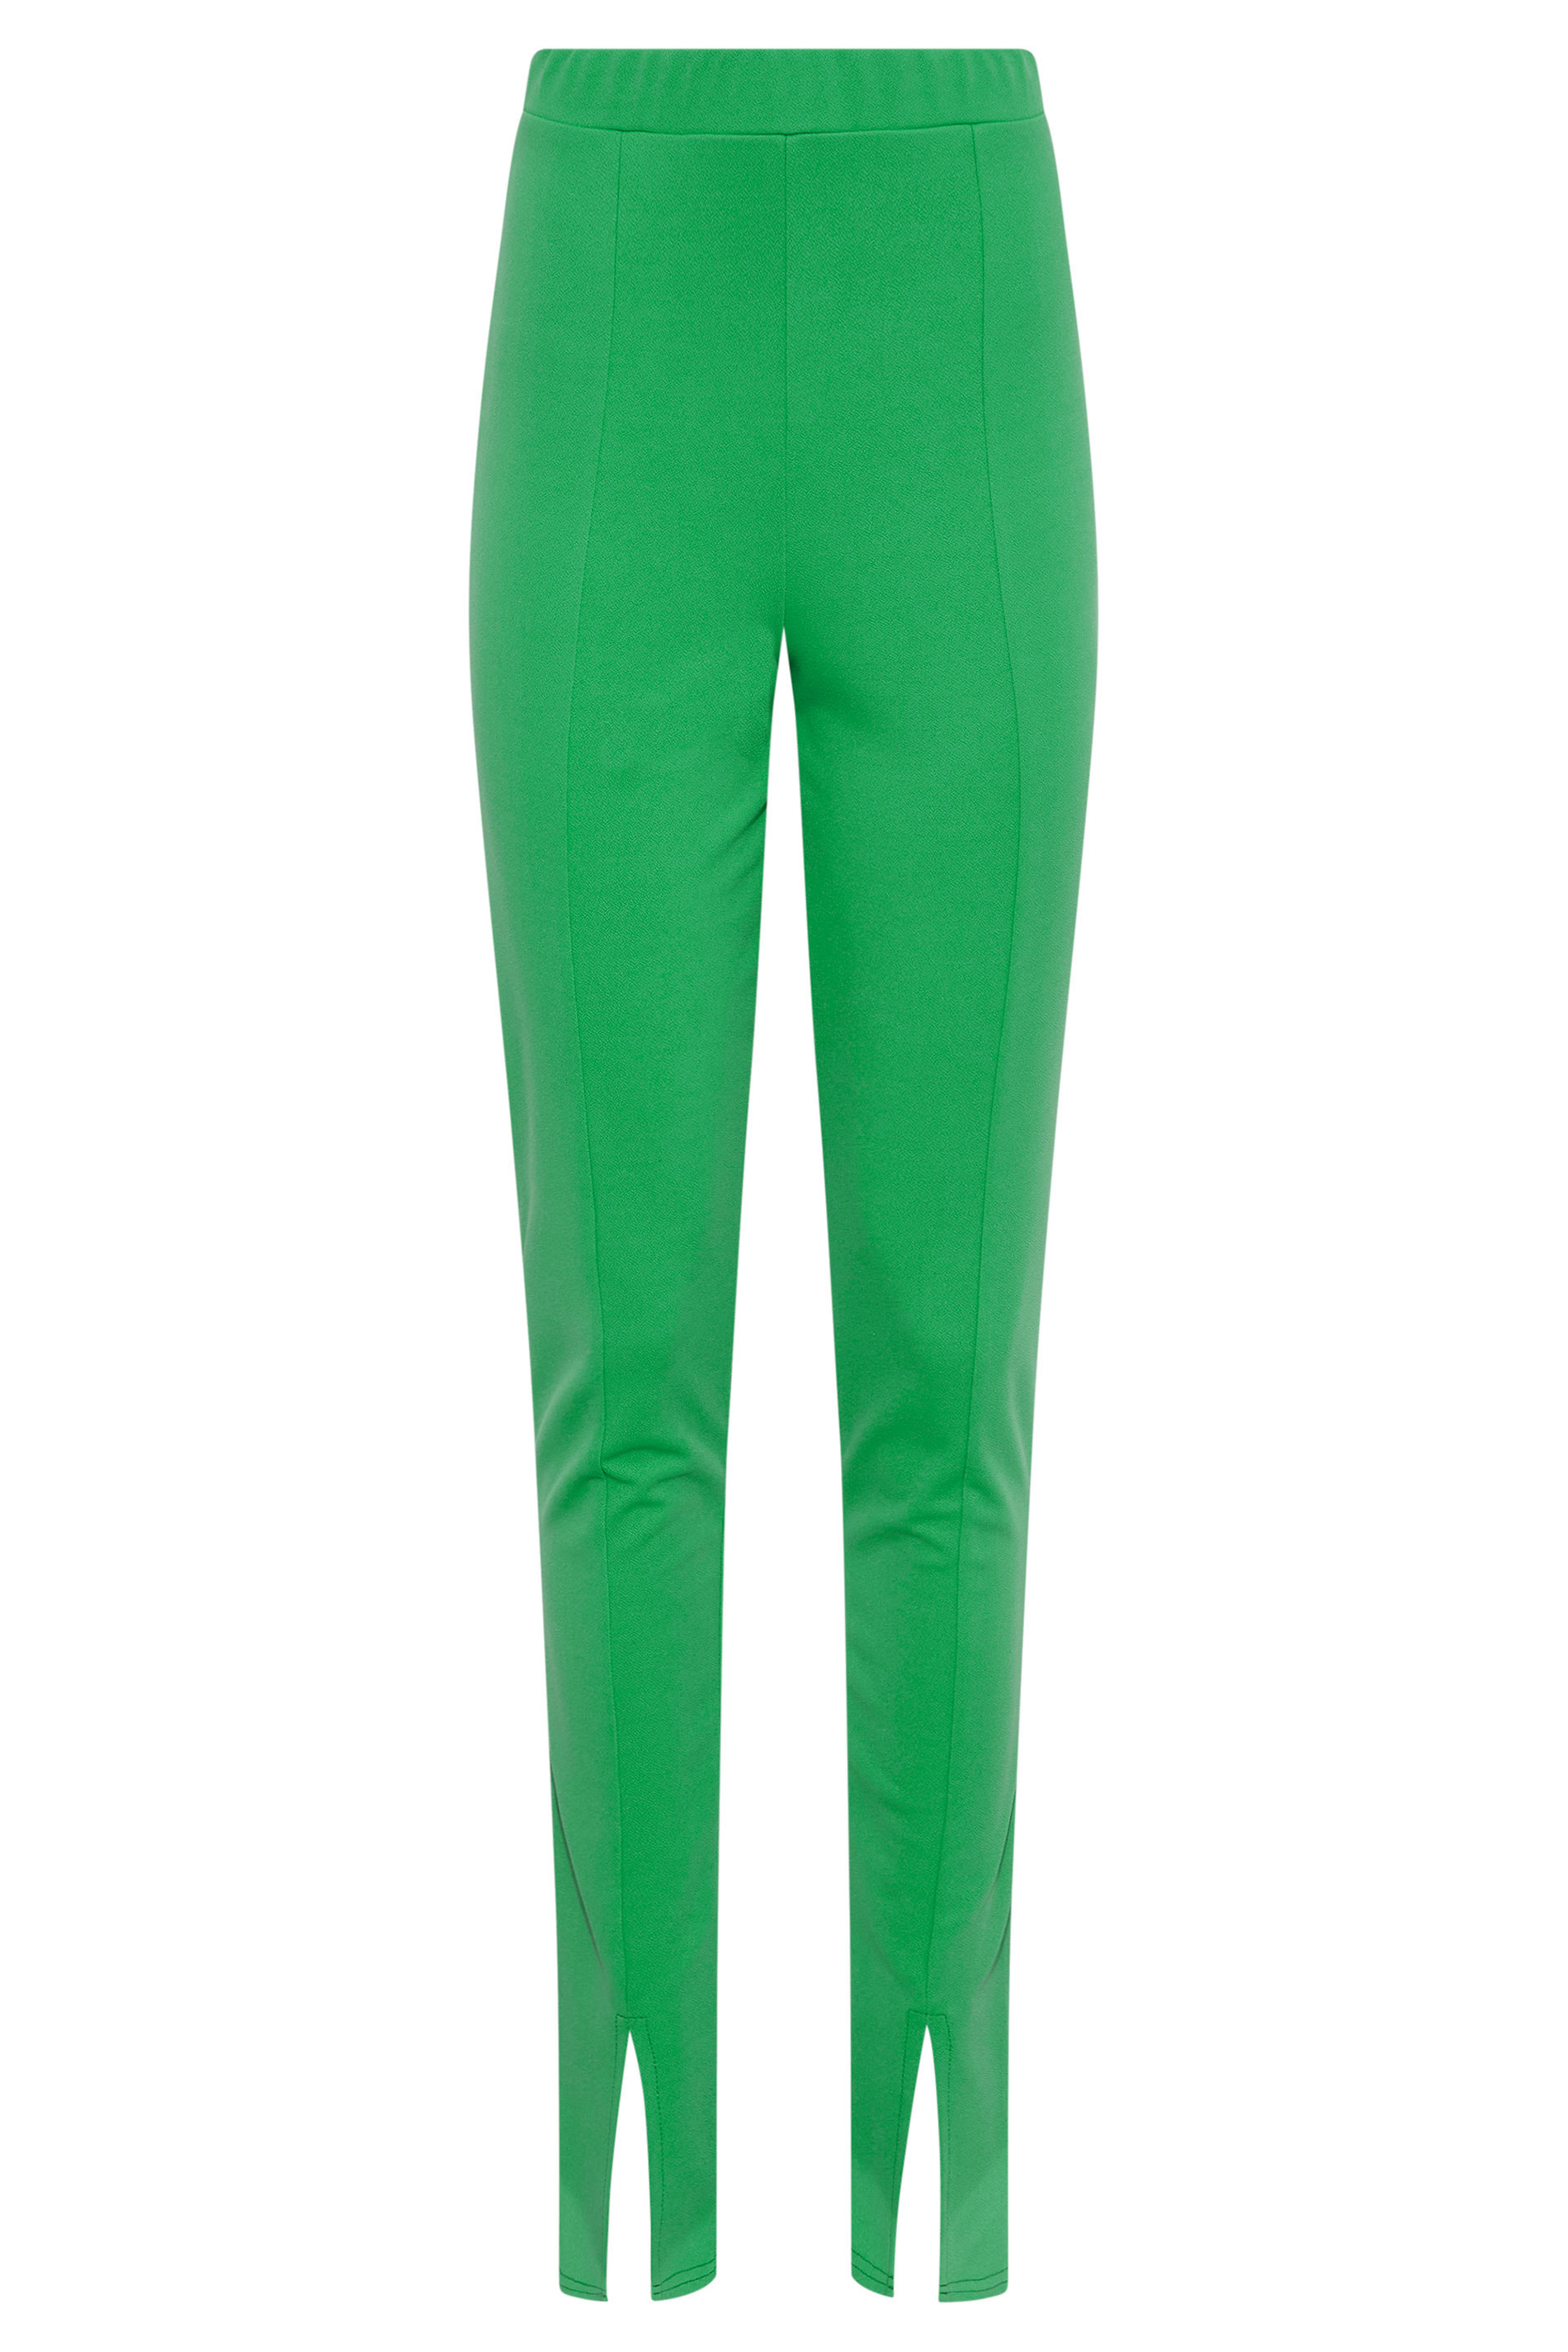 LTS Tall Women's Bright Green Split Front Slim Trousers